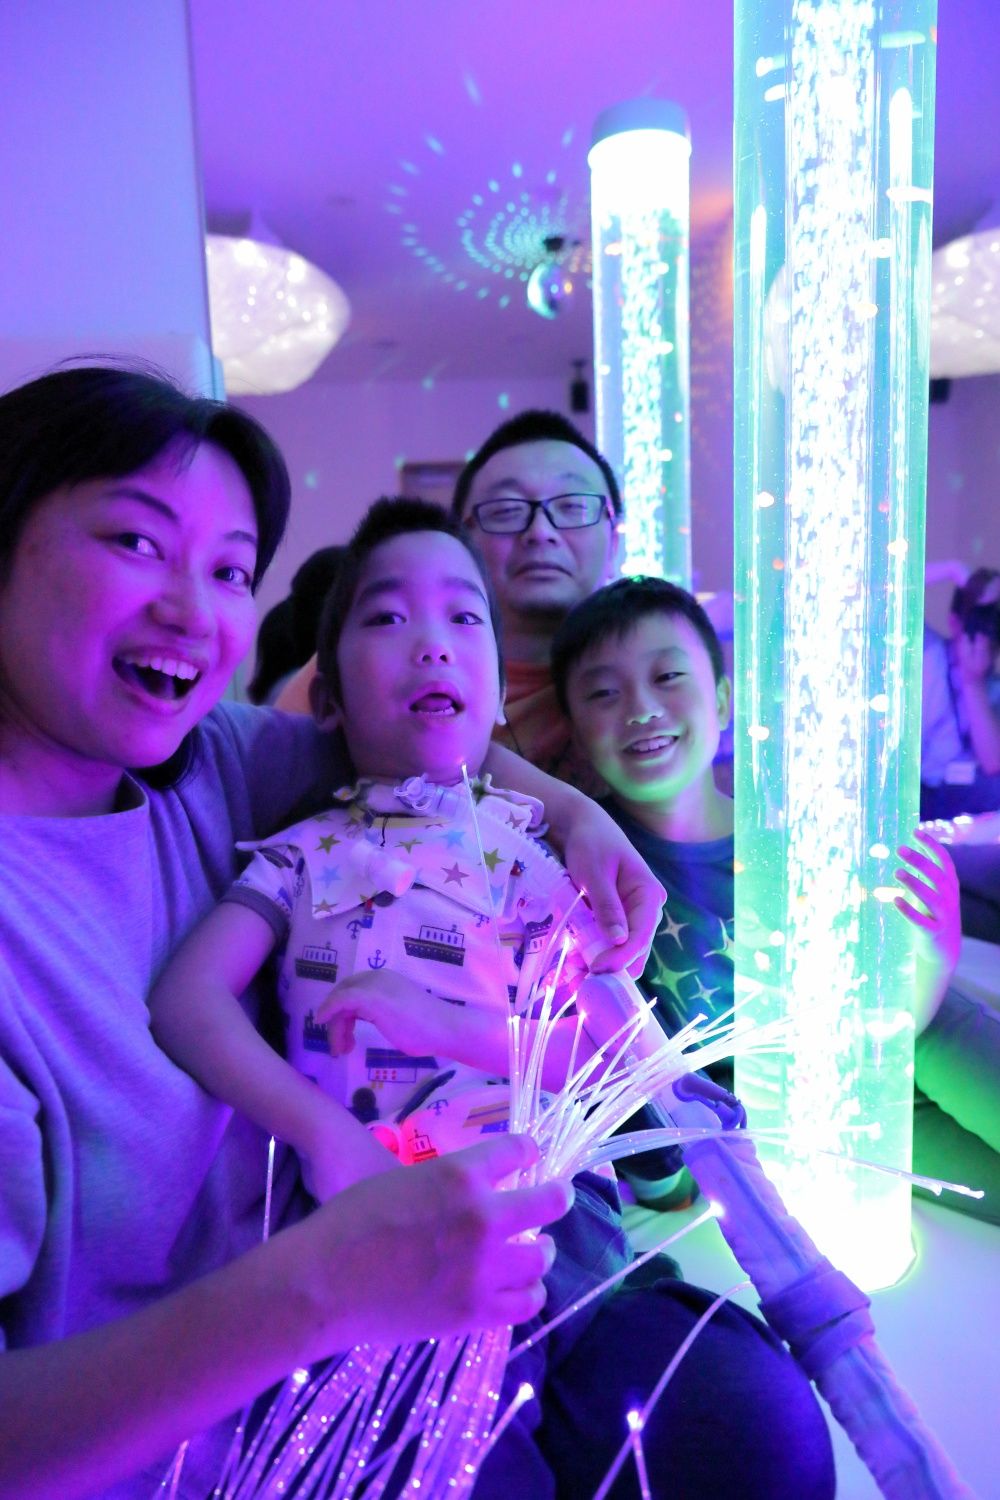 Miyazoe Shinsuke plays in the sensory room with his family. (Photo courtesy of KidsFam Foundation)